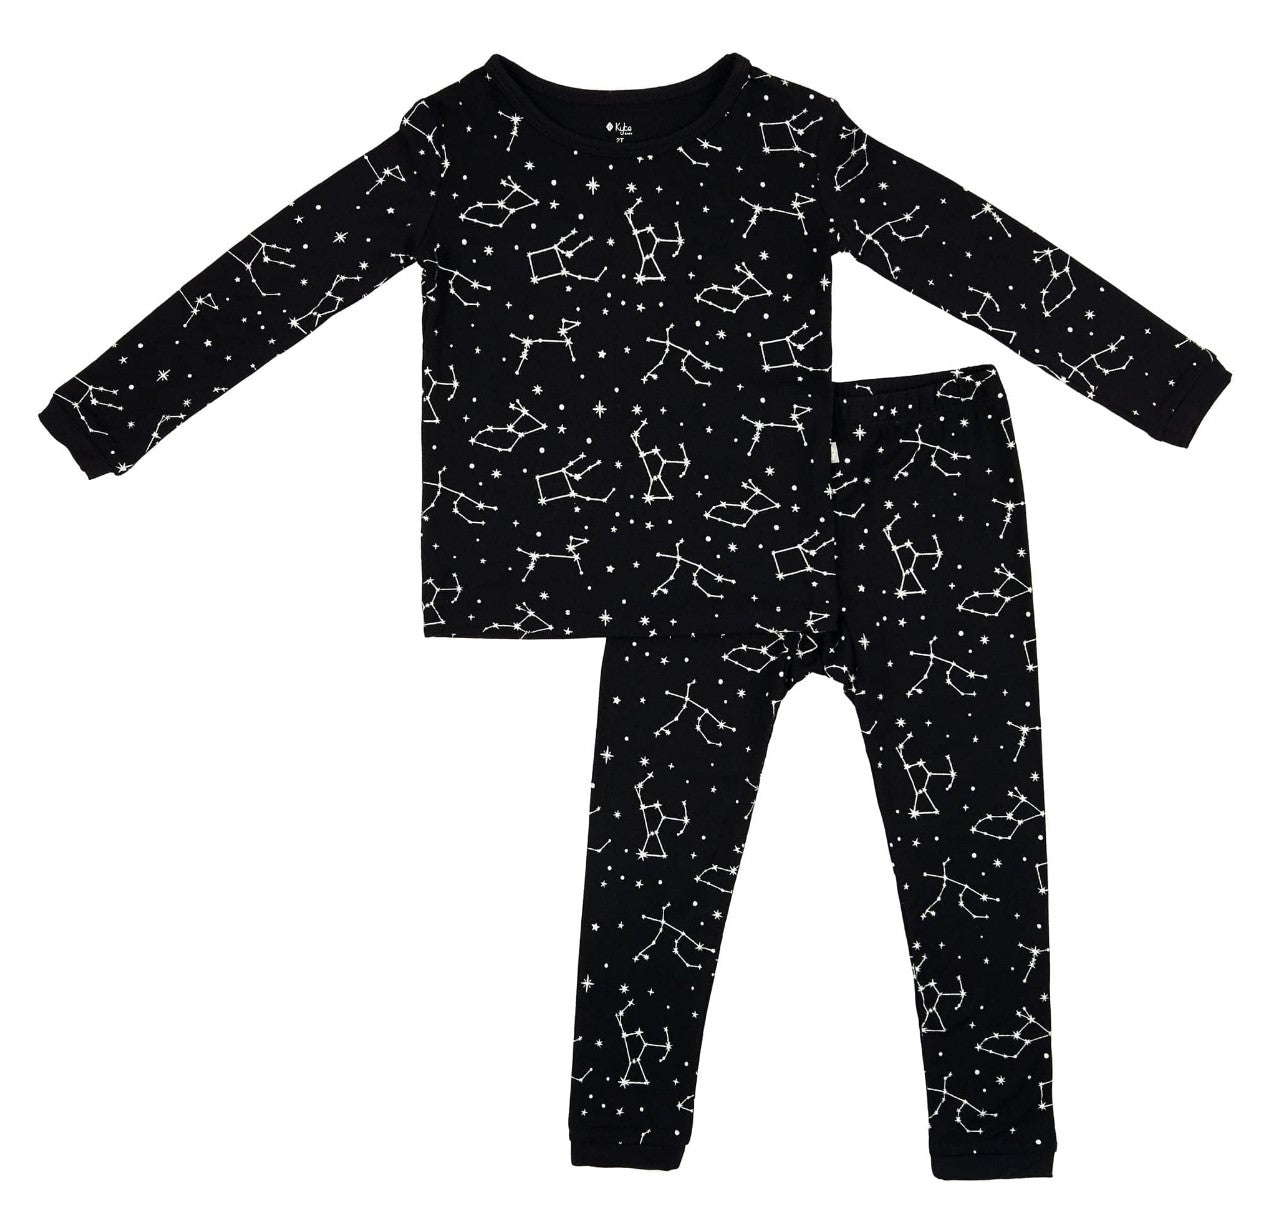 Midnight Constellation Toddler Pajama Set